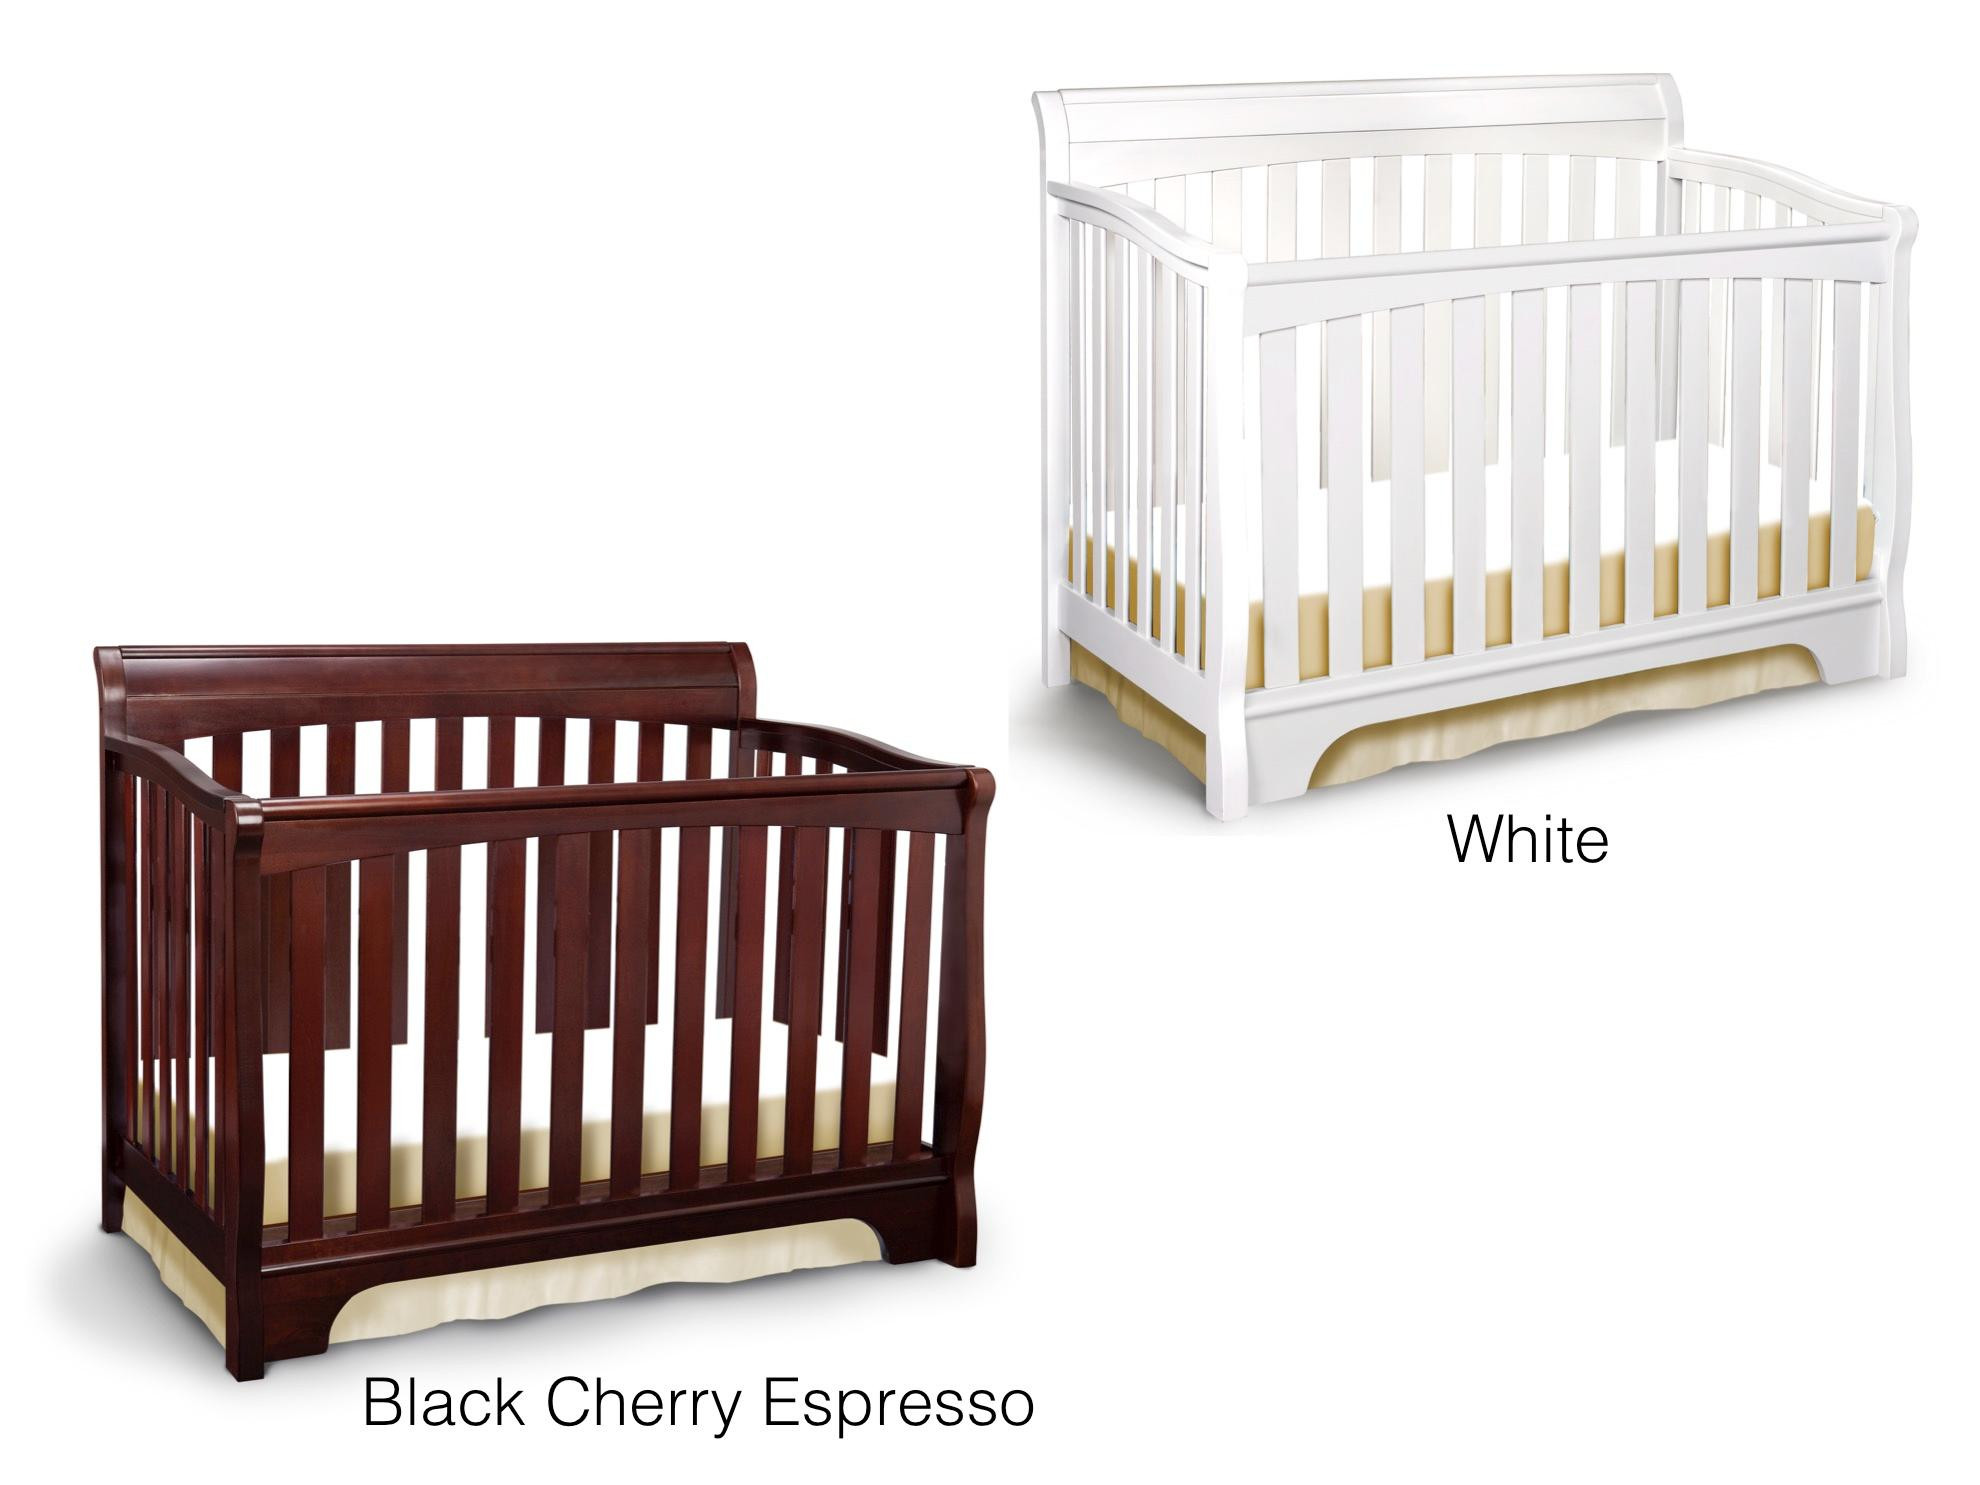 Best ideas about Delta Baby Furniture
. Save or Pin Amazon Delta Children Eclipse 4 in 1 Crib White Baby Now.